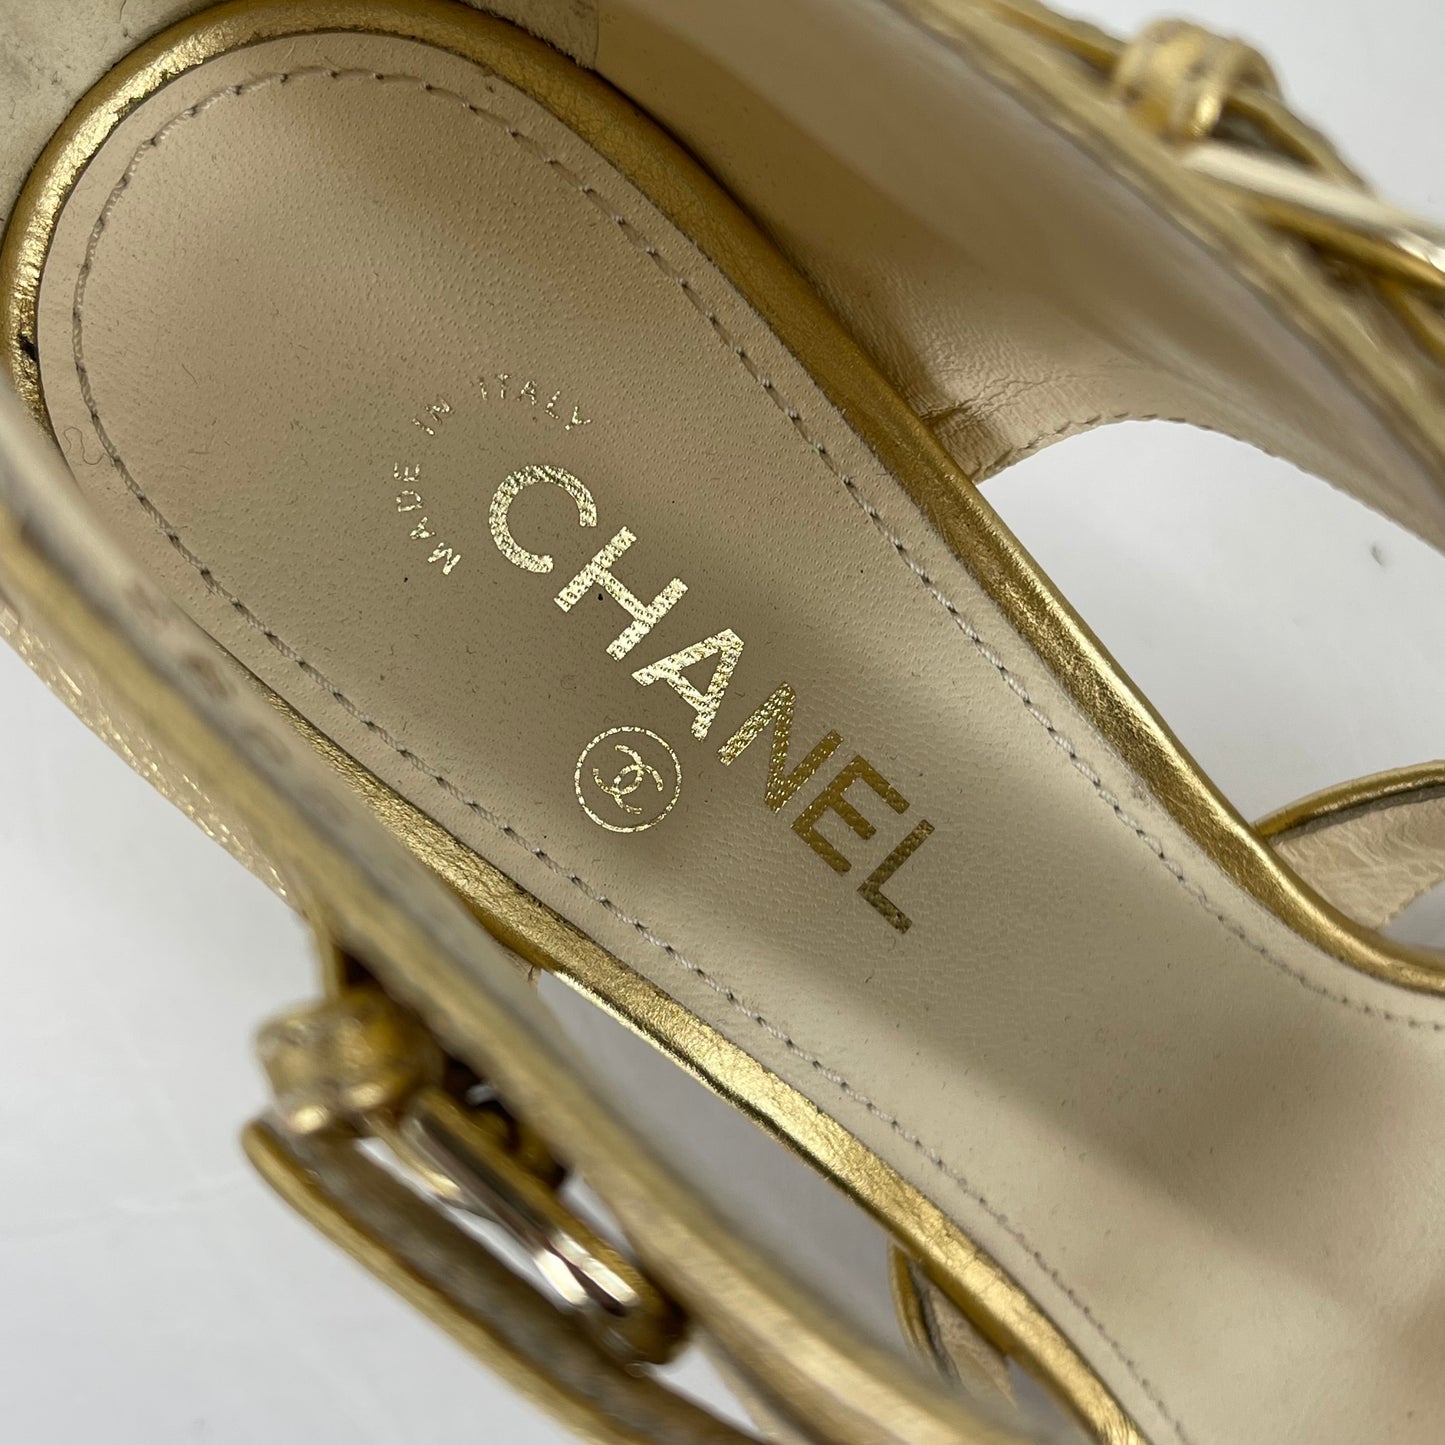 Authentic Chanel Gold Chain Block Heel Sandals